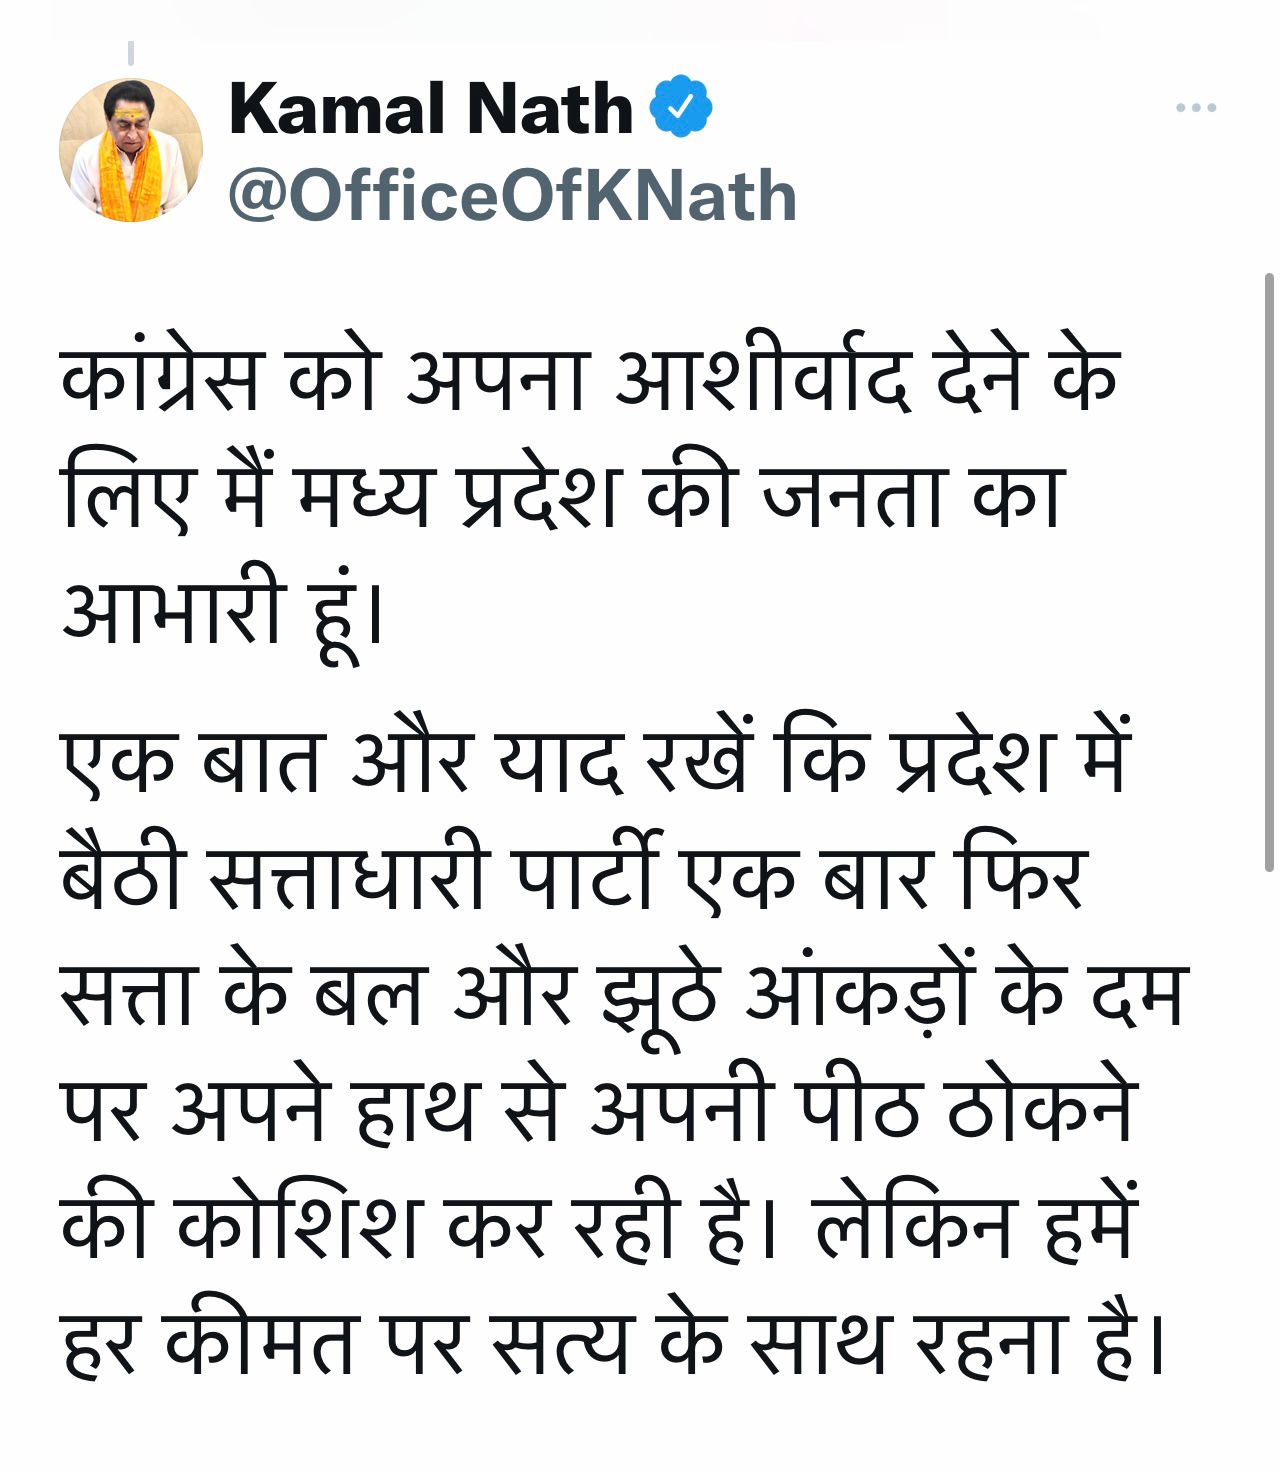 Kamal Nath said became the 89 district president of Congress